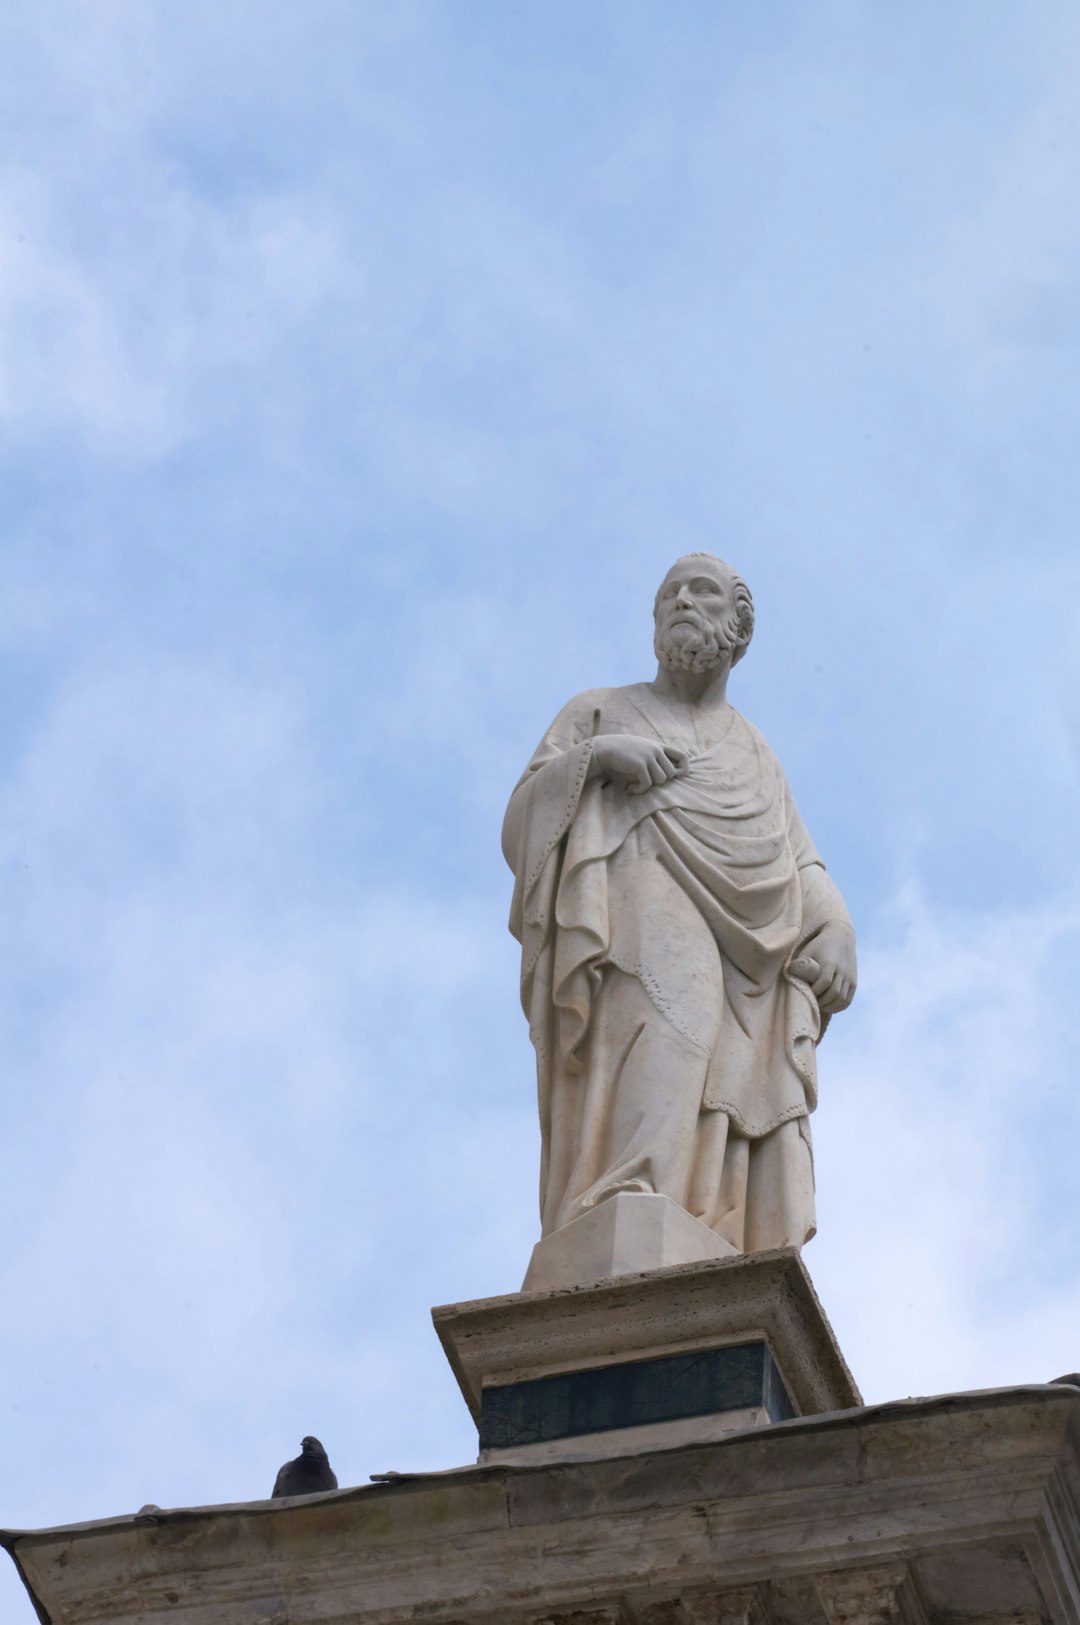 man in robe statue under white sky during daytime